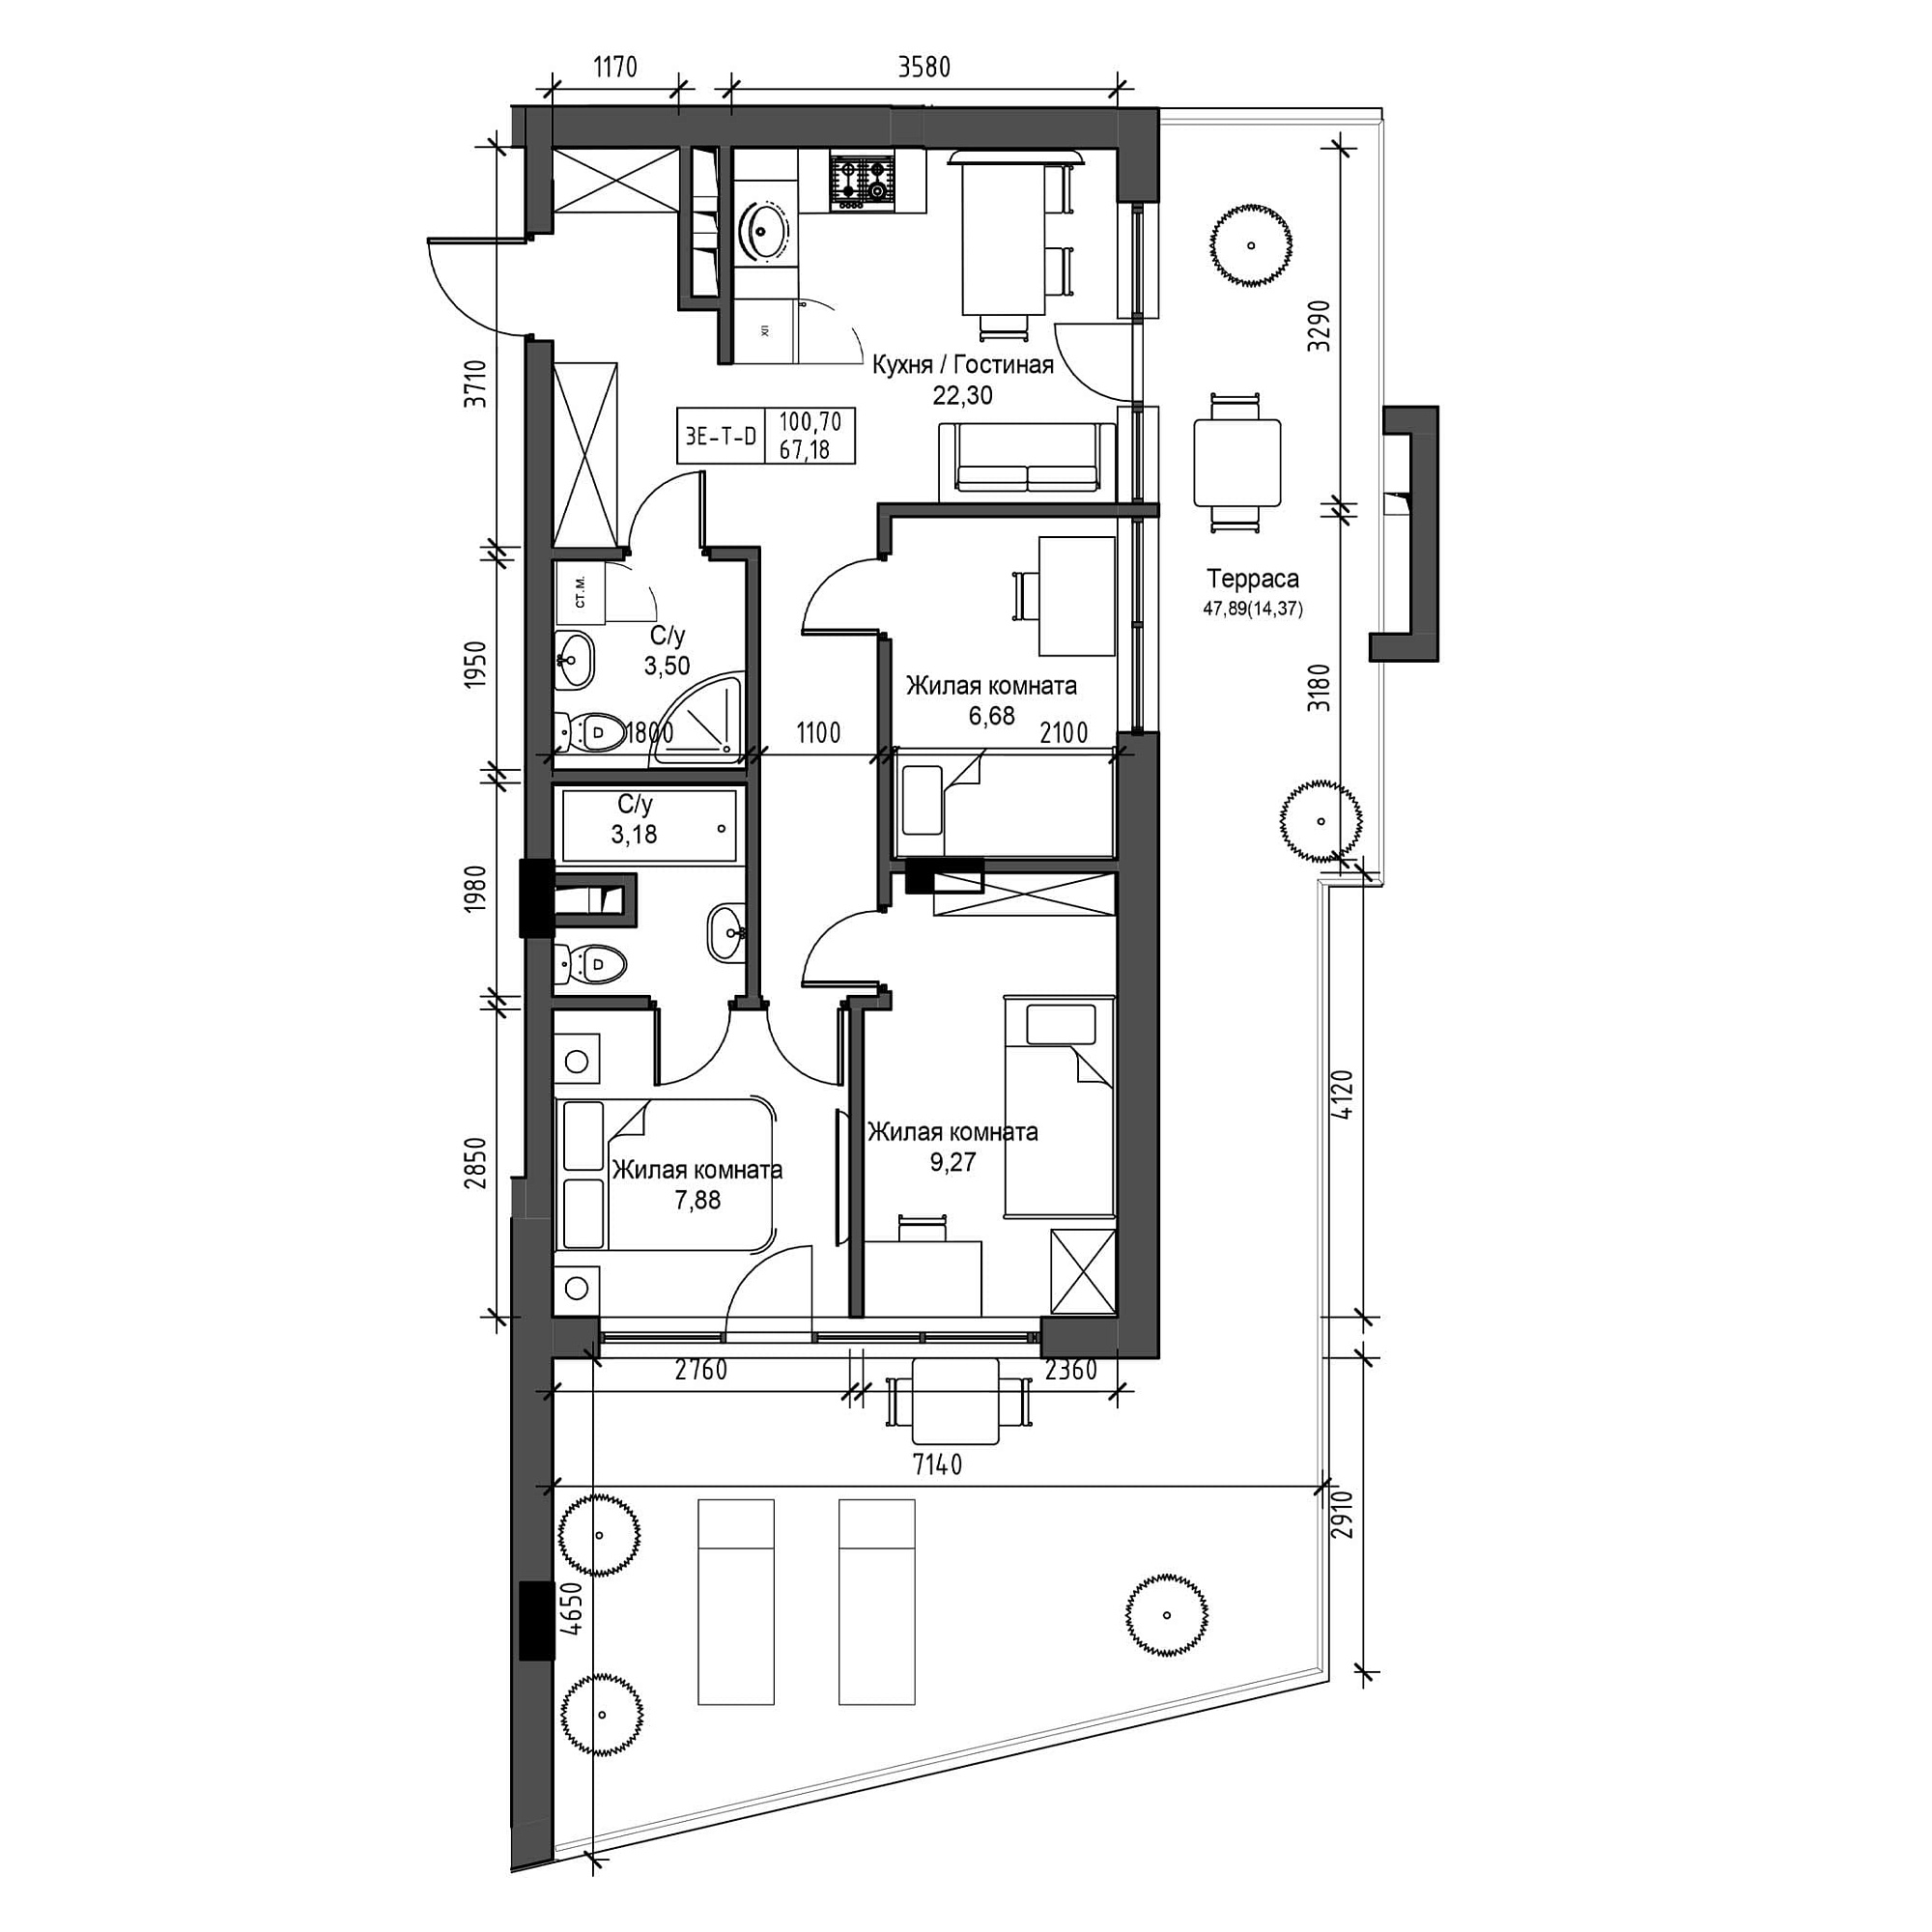 Планування 3-к квартира площею 67.18м2, UM-001-07/0004.